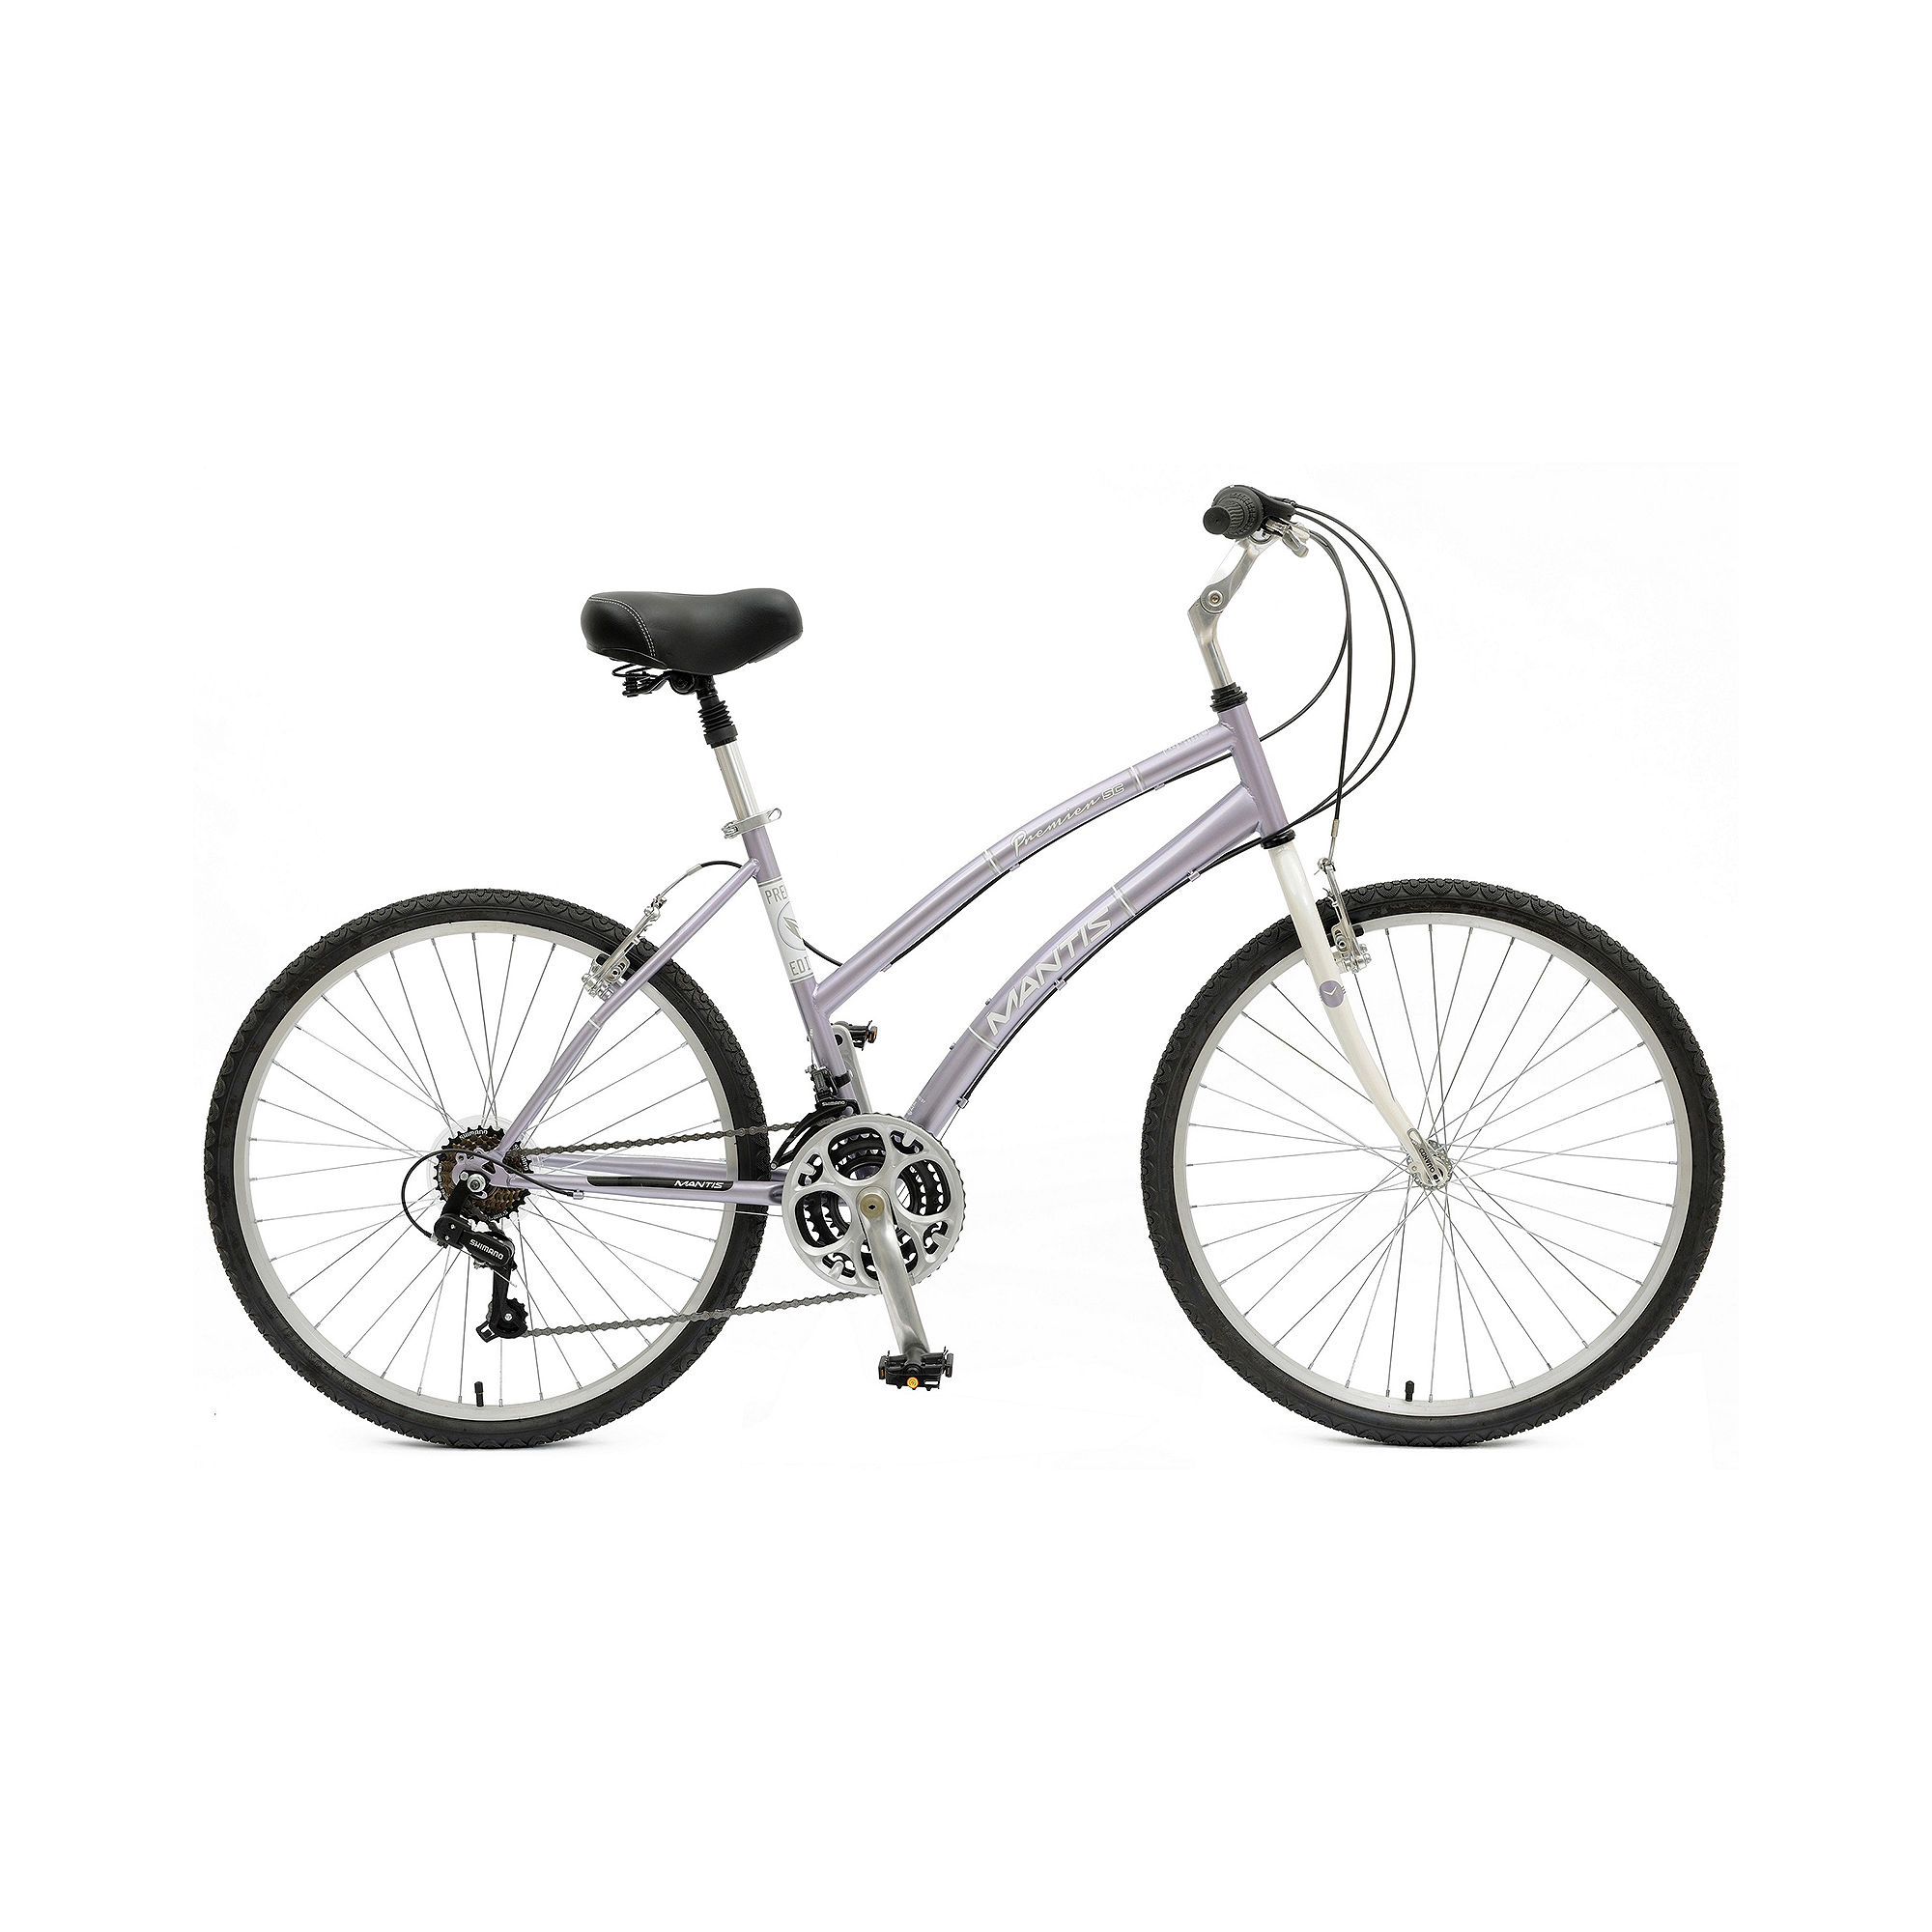 Mantis Premier 726L 21-Speed Women's Comfort Bicycle